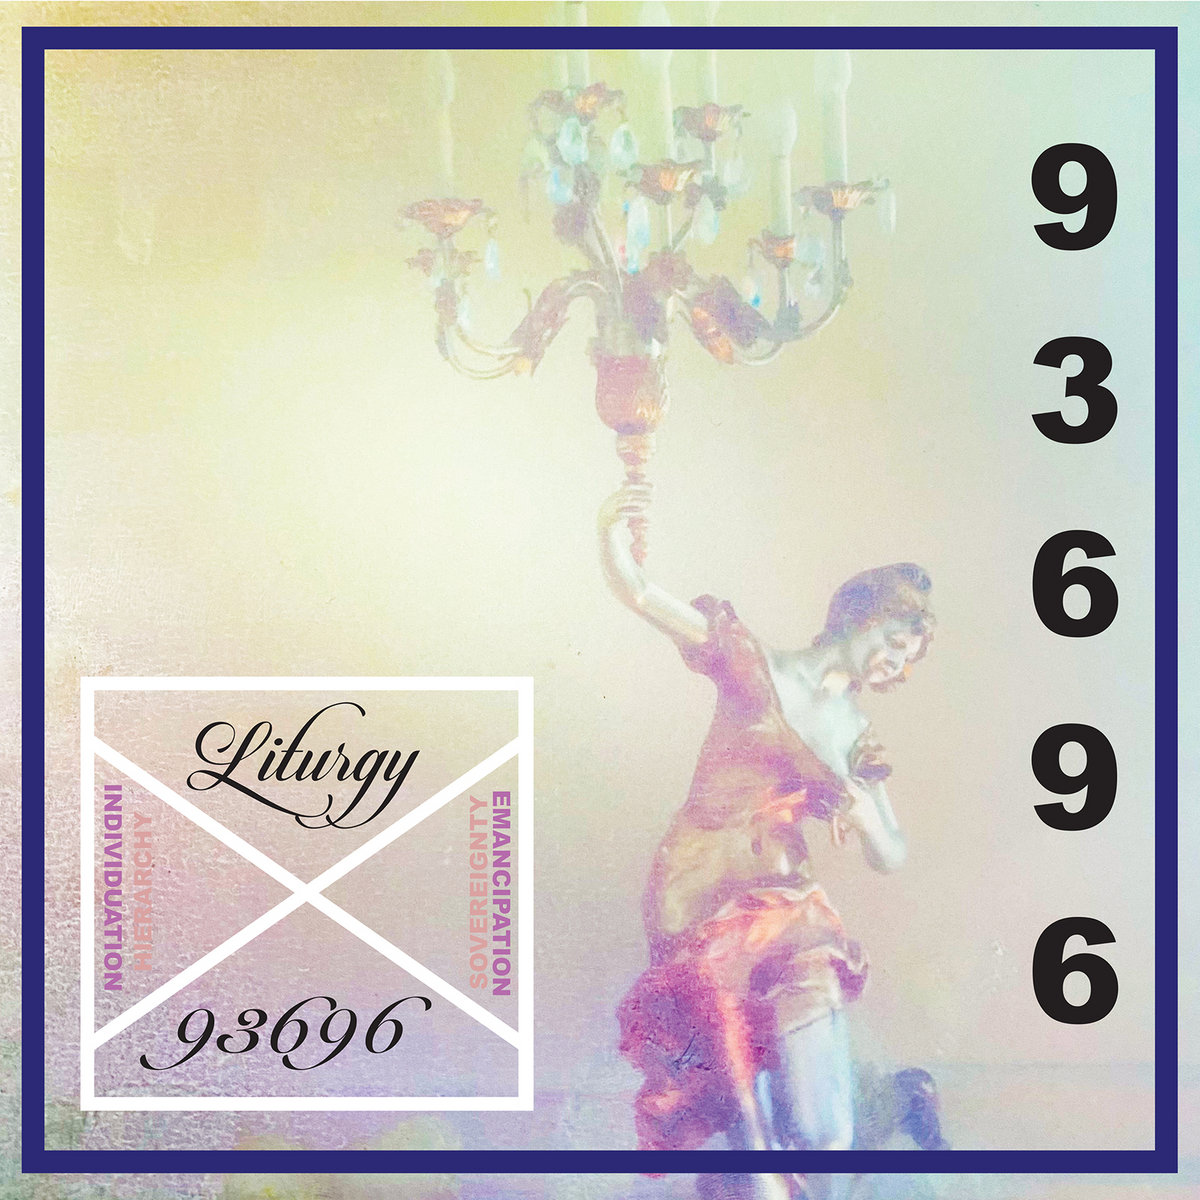 Lithurgy - "93696" - 2023